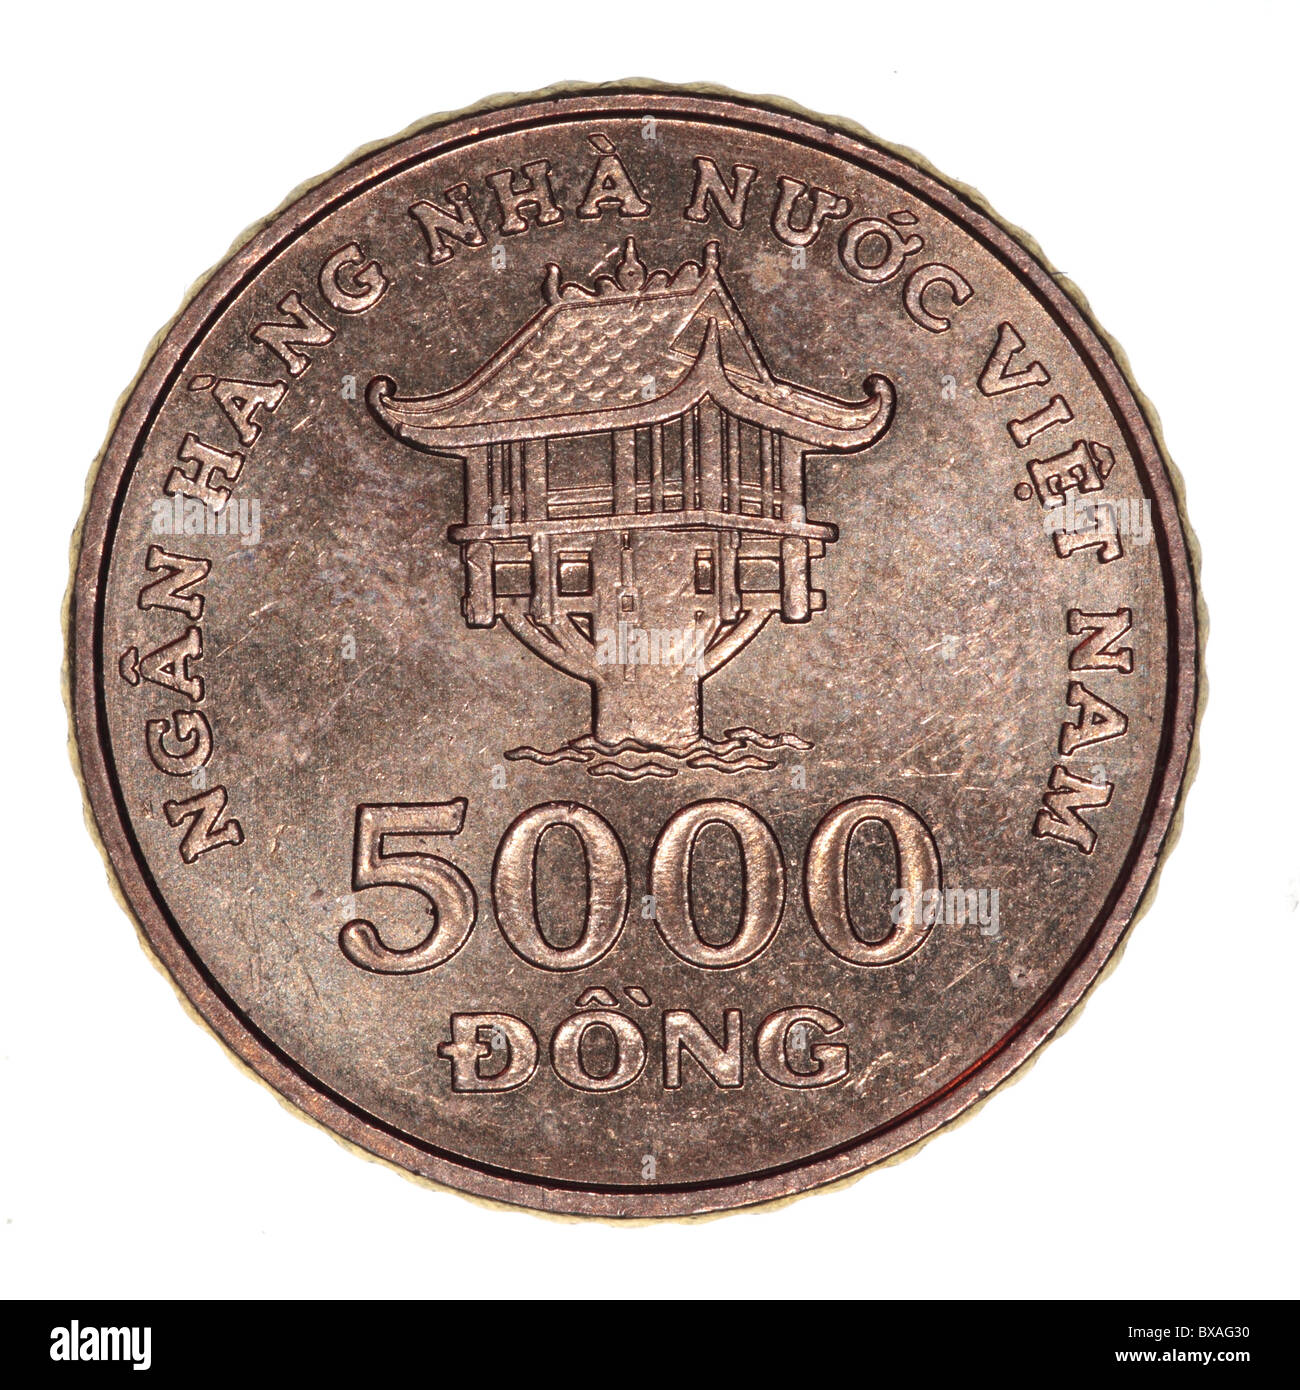 VIET NAM 5000 DONG 2003 XF CHUA MOT COT PAGODA IN HANOI,NATIONAL EMBLEM 